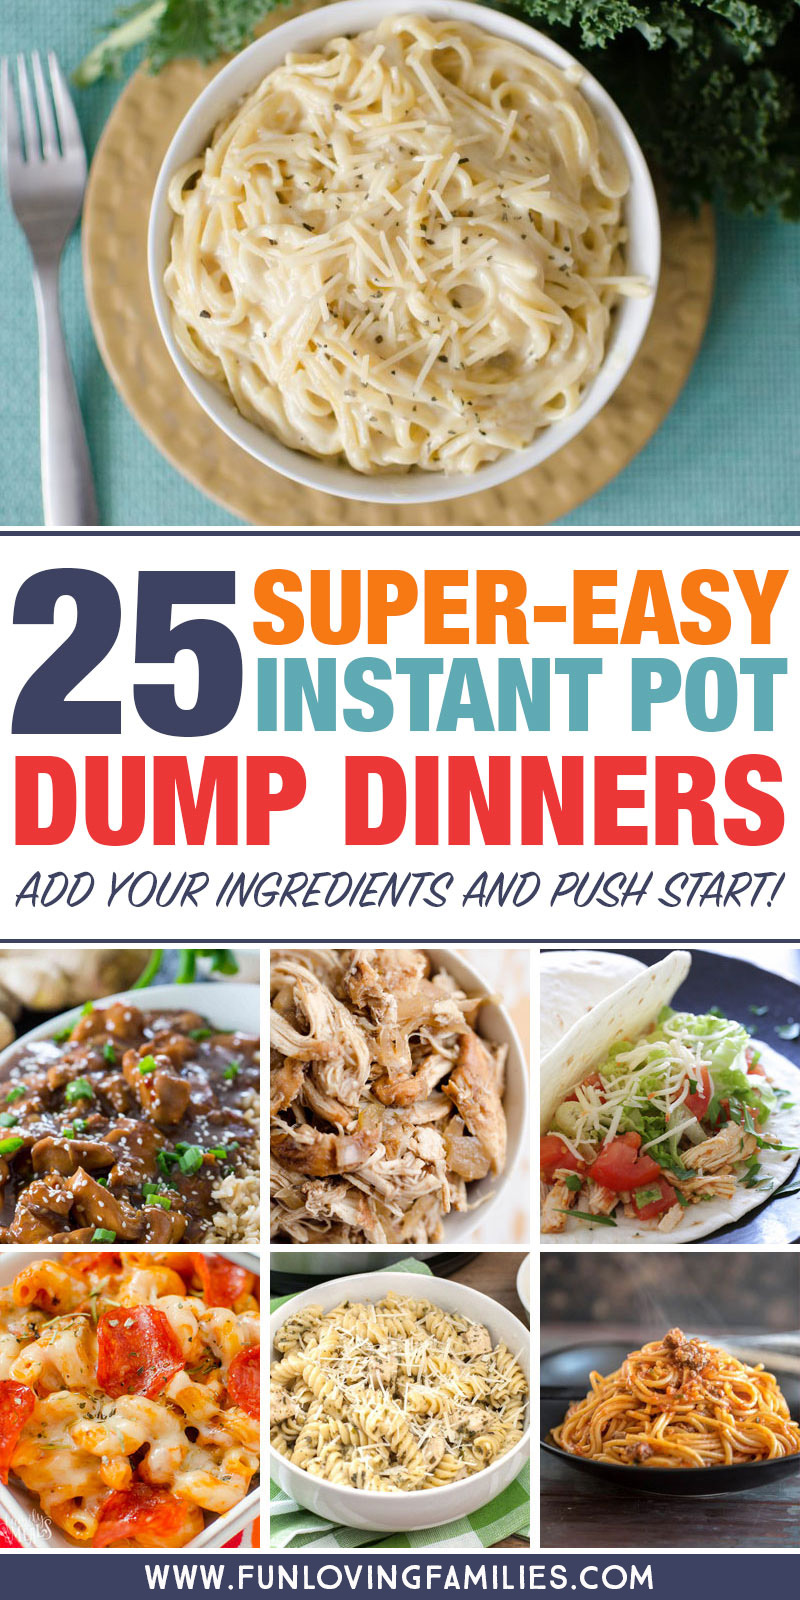 https://www.funlovingfamilies.com/wp-content/uploads/2019/11/easy-instant-pot-dump-recipes-weeknight-dinners.jpg